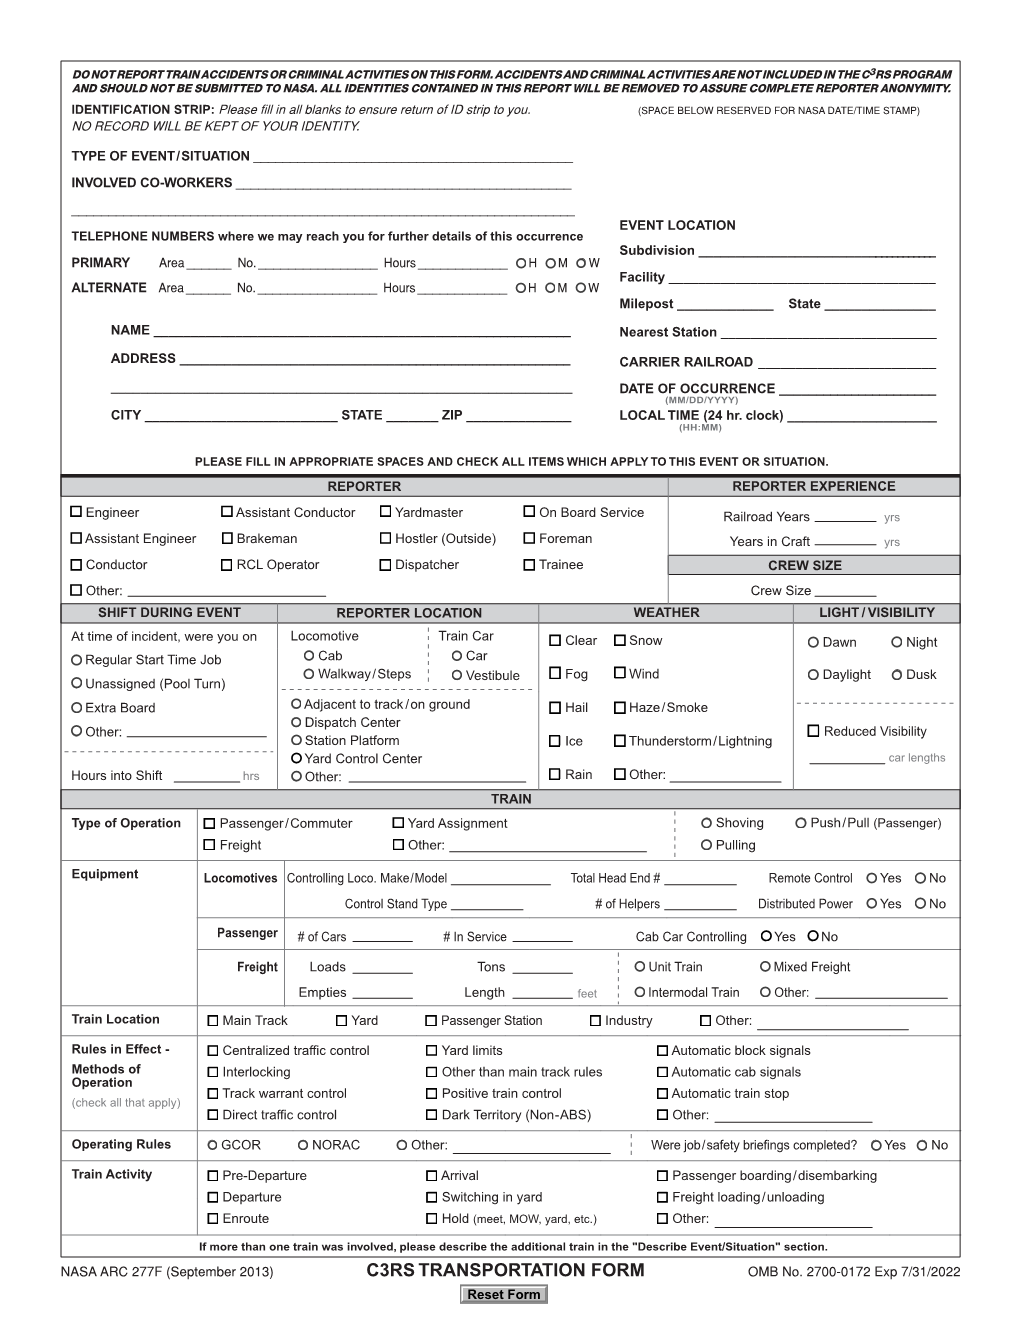 C3RS Transportation Report Form